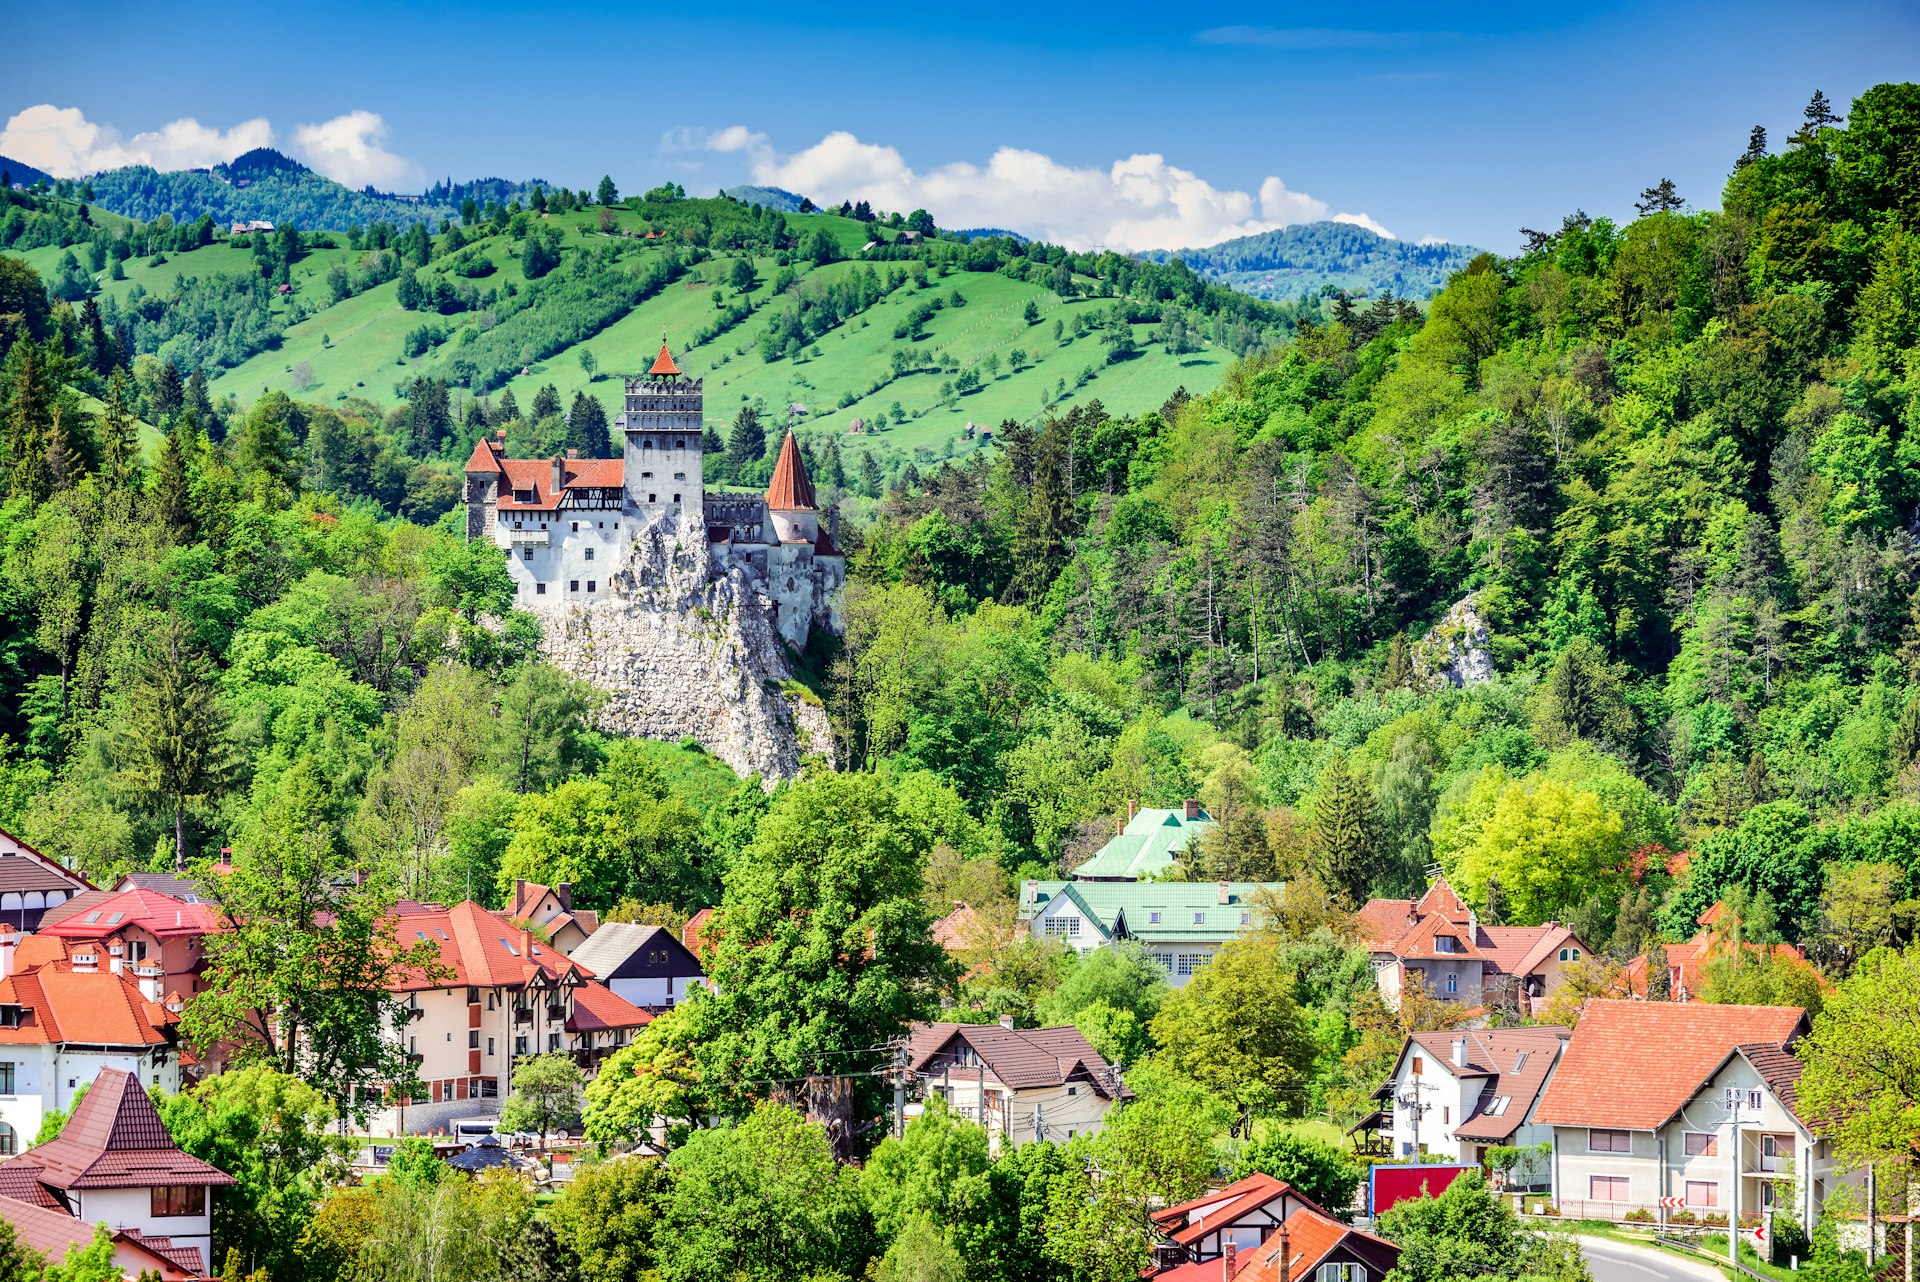 Medieval fortress at the border between Wallachia and Transylvania.